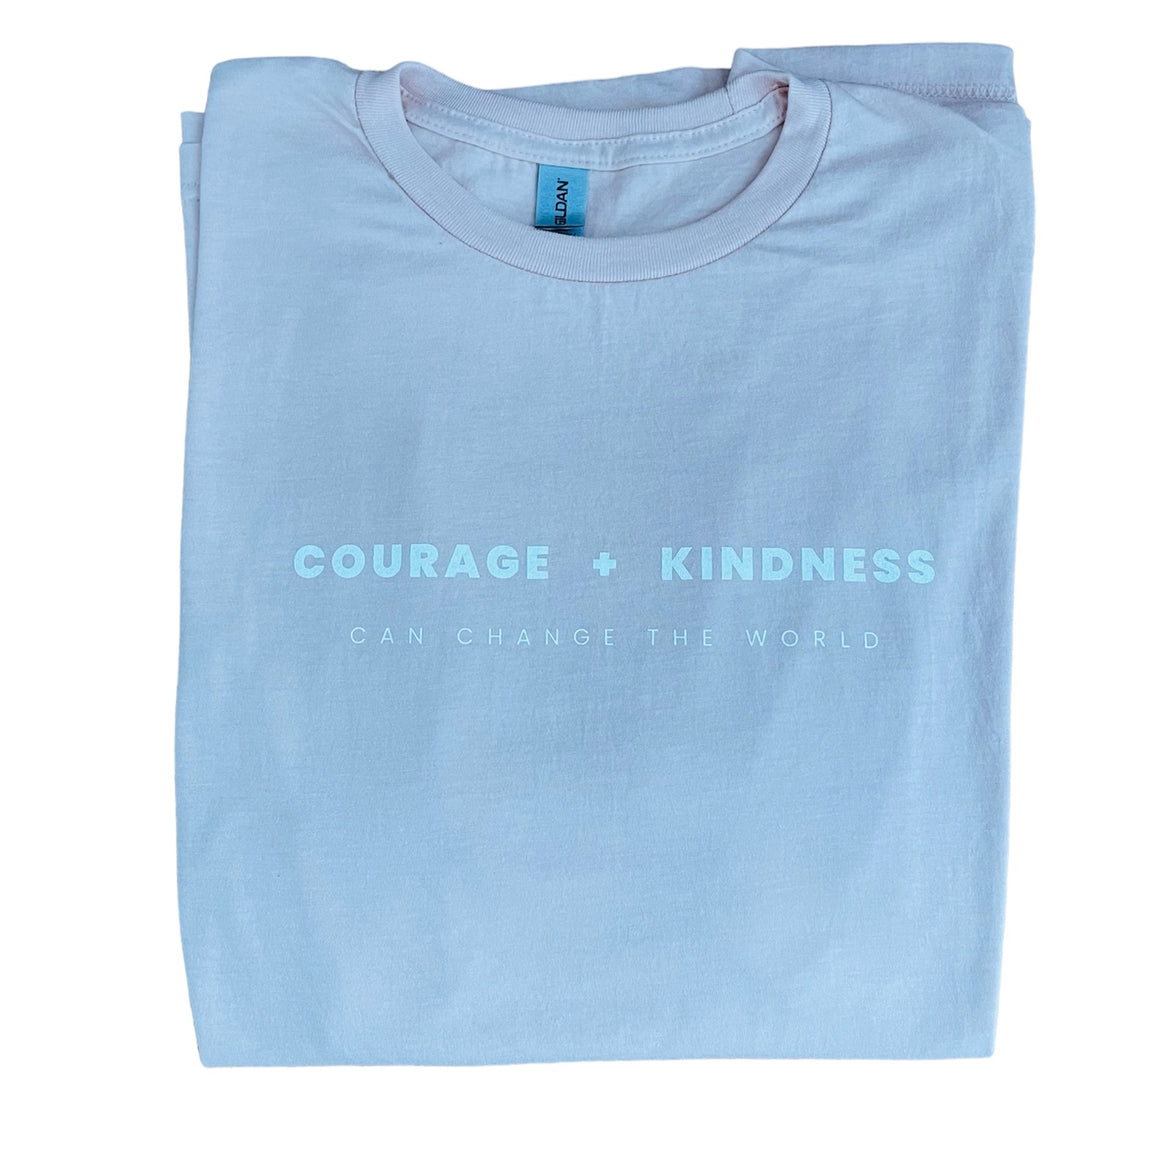 Adult T-Shirt | Gildan Softsyle | 2 Colors